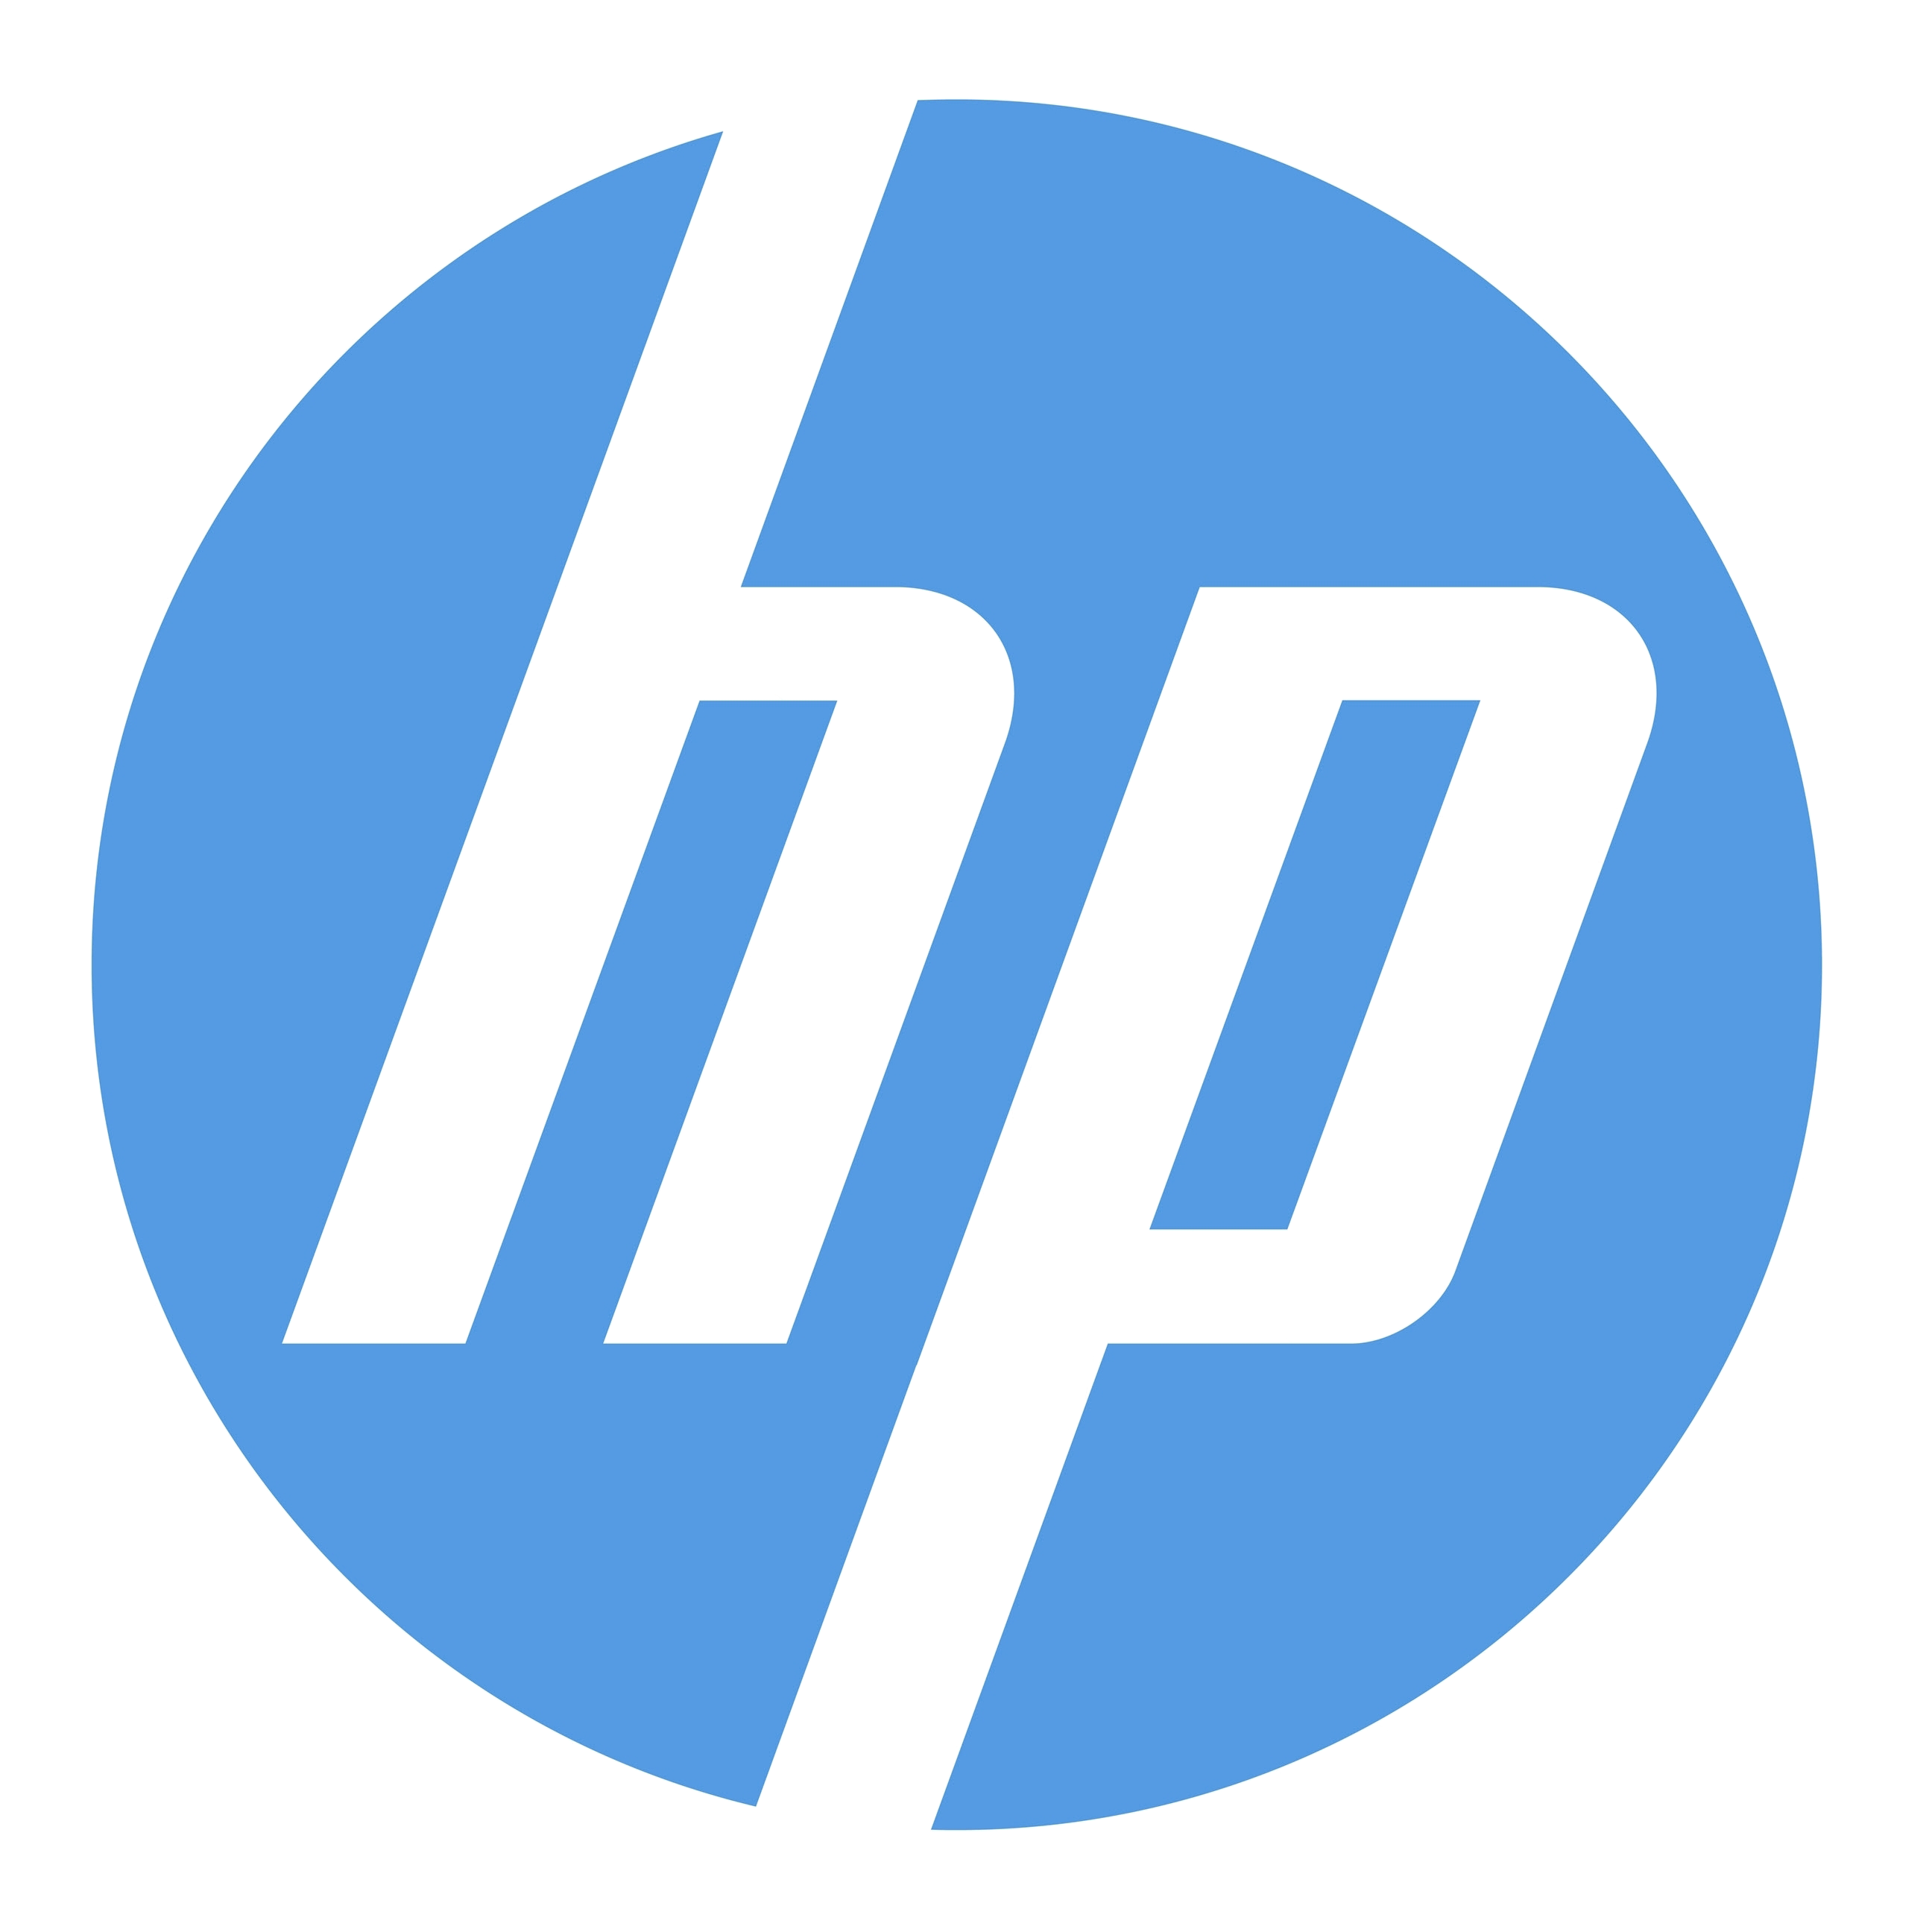 HP 로고 PNG 이미지 - PurePNG | 무료 투명 CC0 PNG 이미지 라이브러리